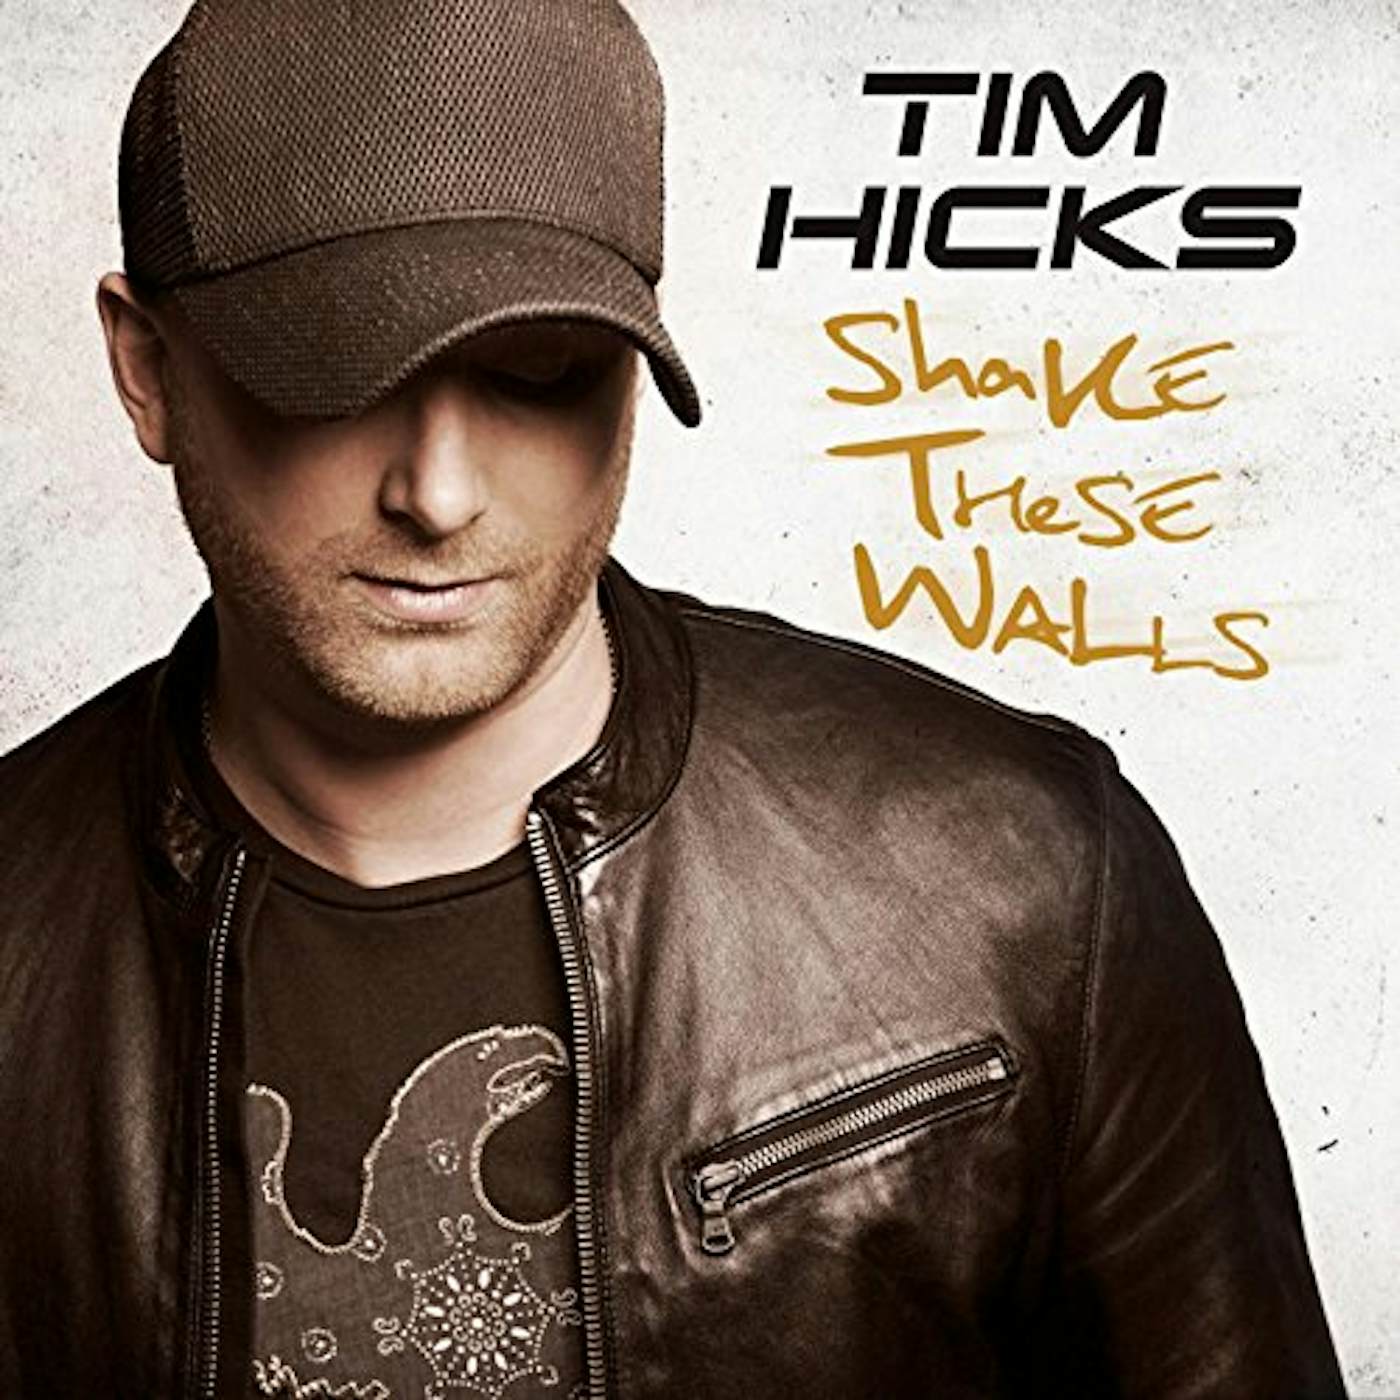 Tim Hicks Shake These Walls Vinyl Record